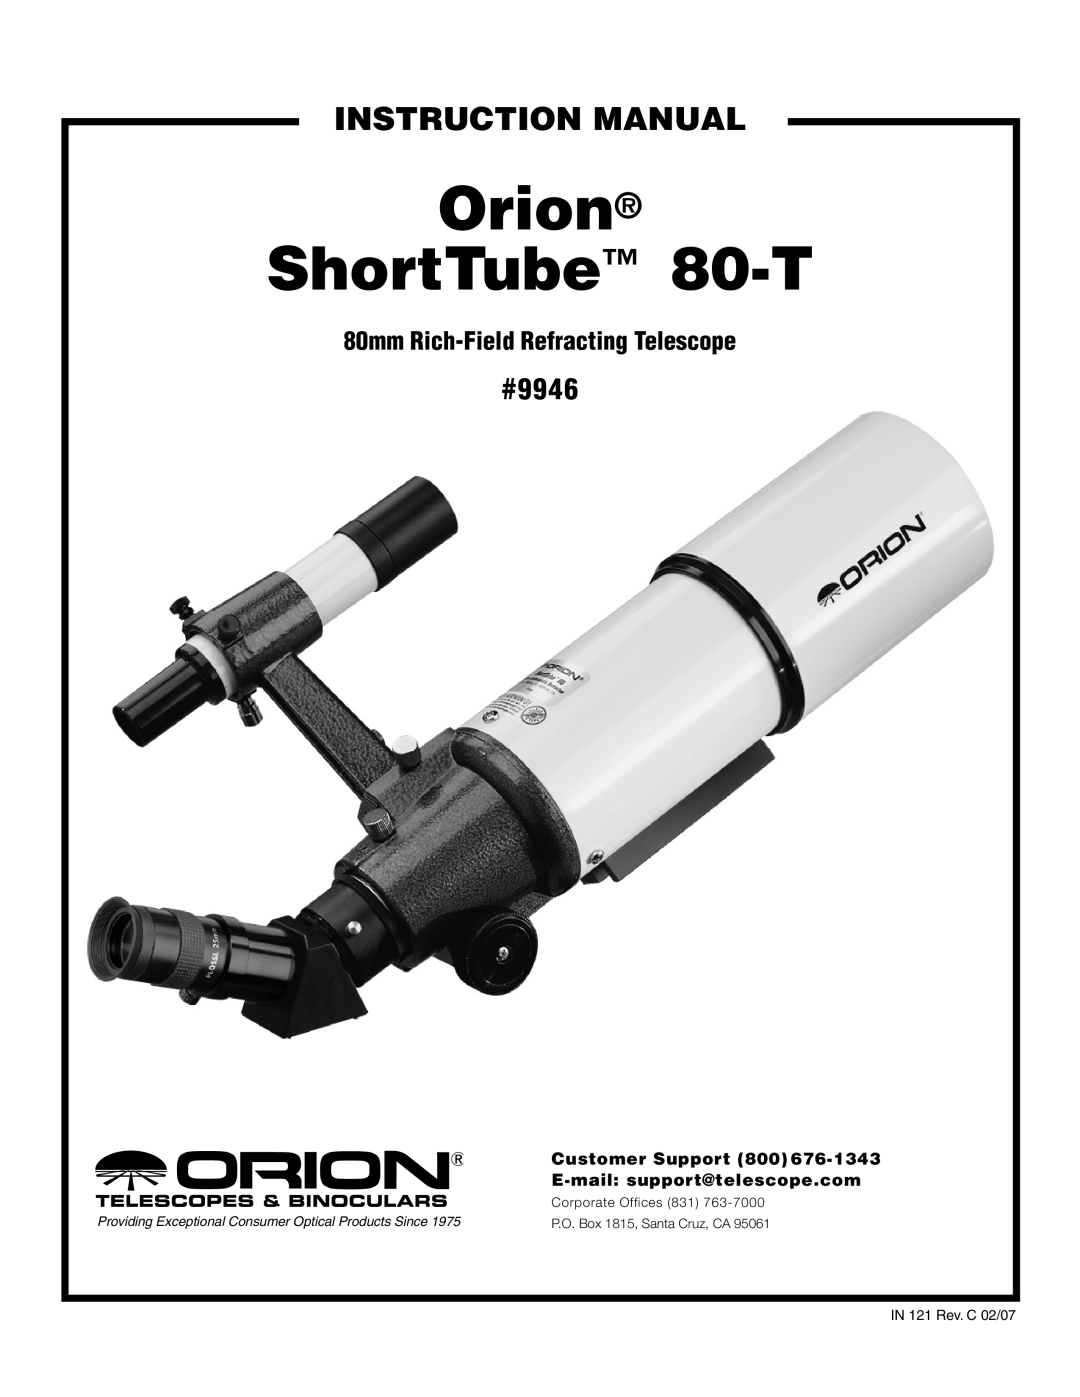 Orion instruction manual #9946, Orion ShortTube 80-T, 80mm Rich-FieldRefracting Telescope, Customer Support 